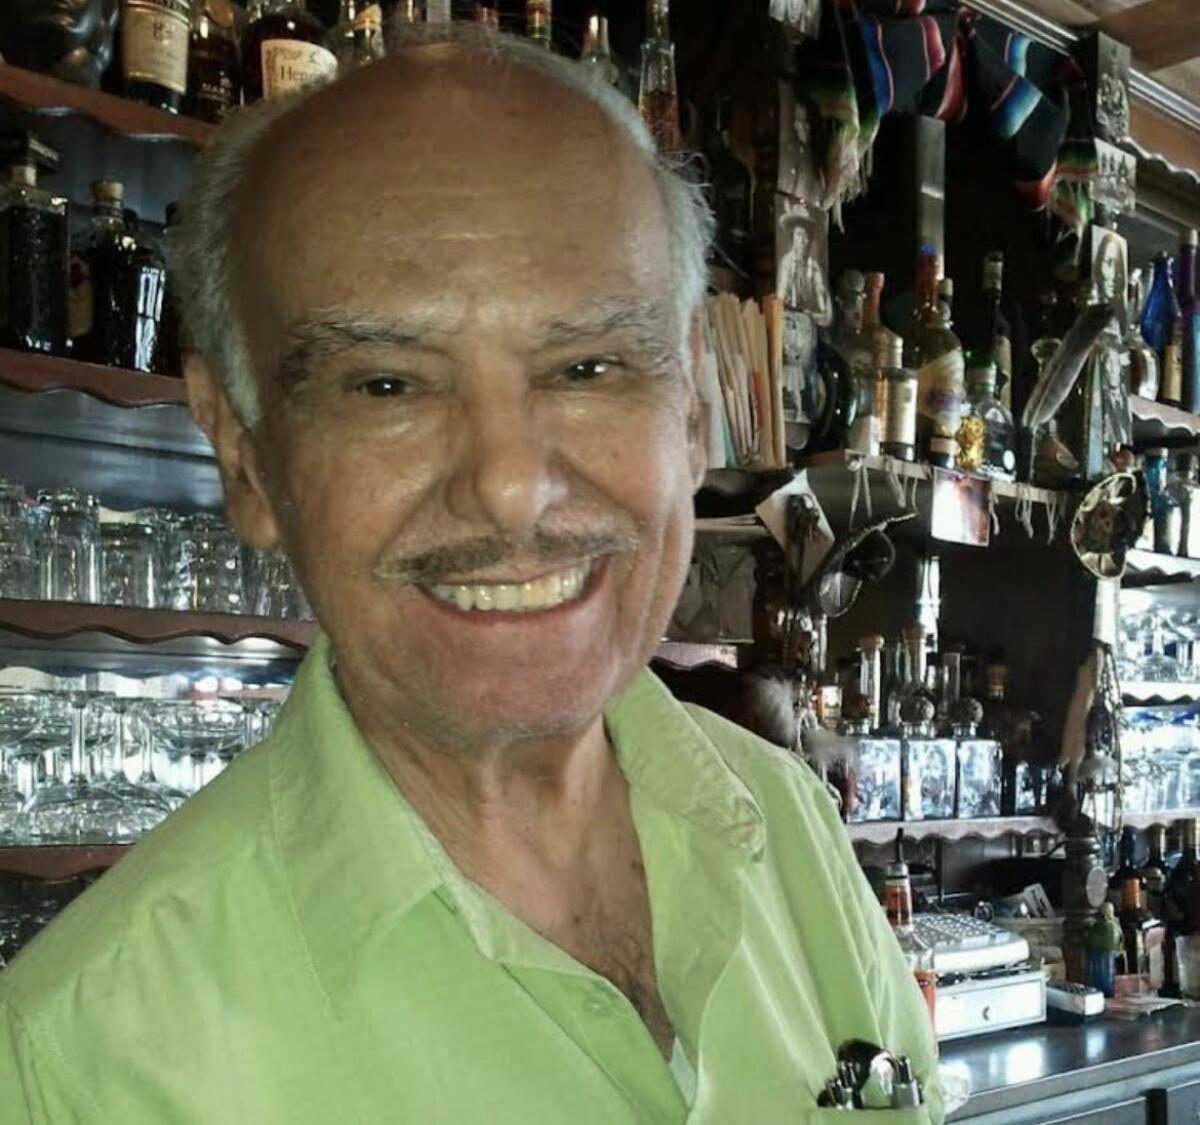 Antonio Gutiérrez at his Melrose Avenue restaurant around 2013.